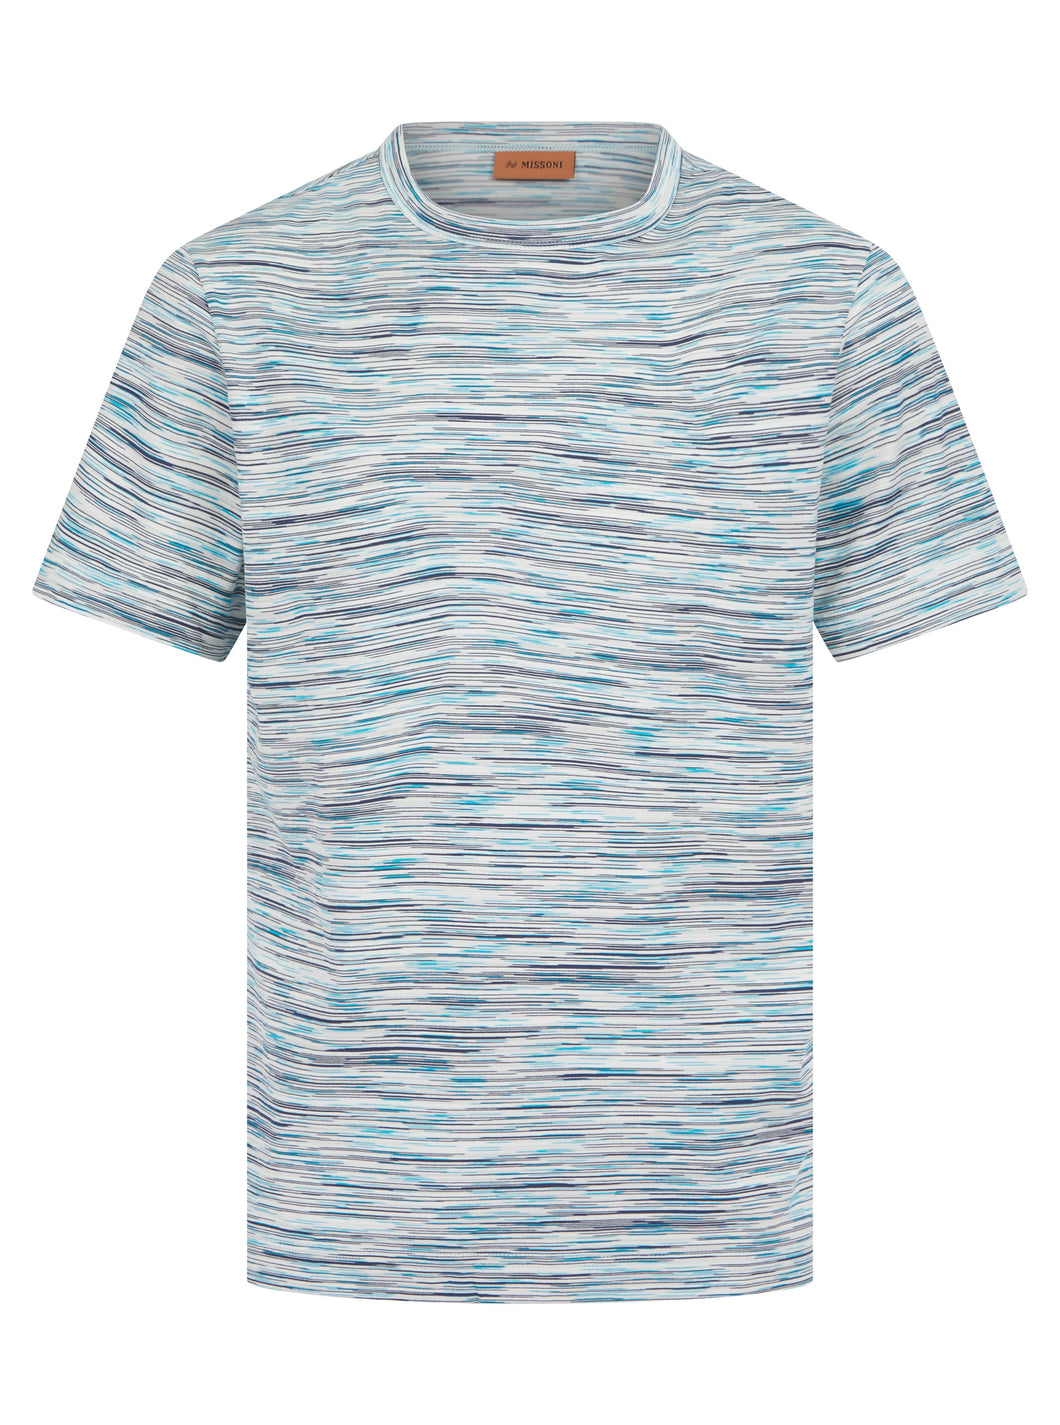 Missoni Stripe T Shirt Sky